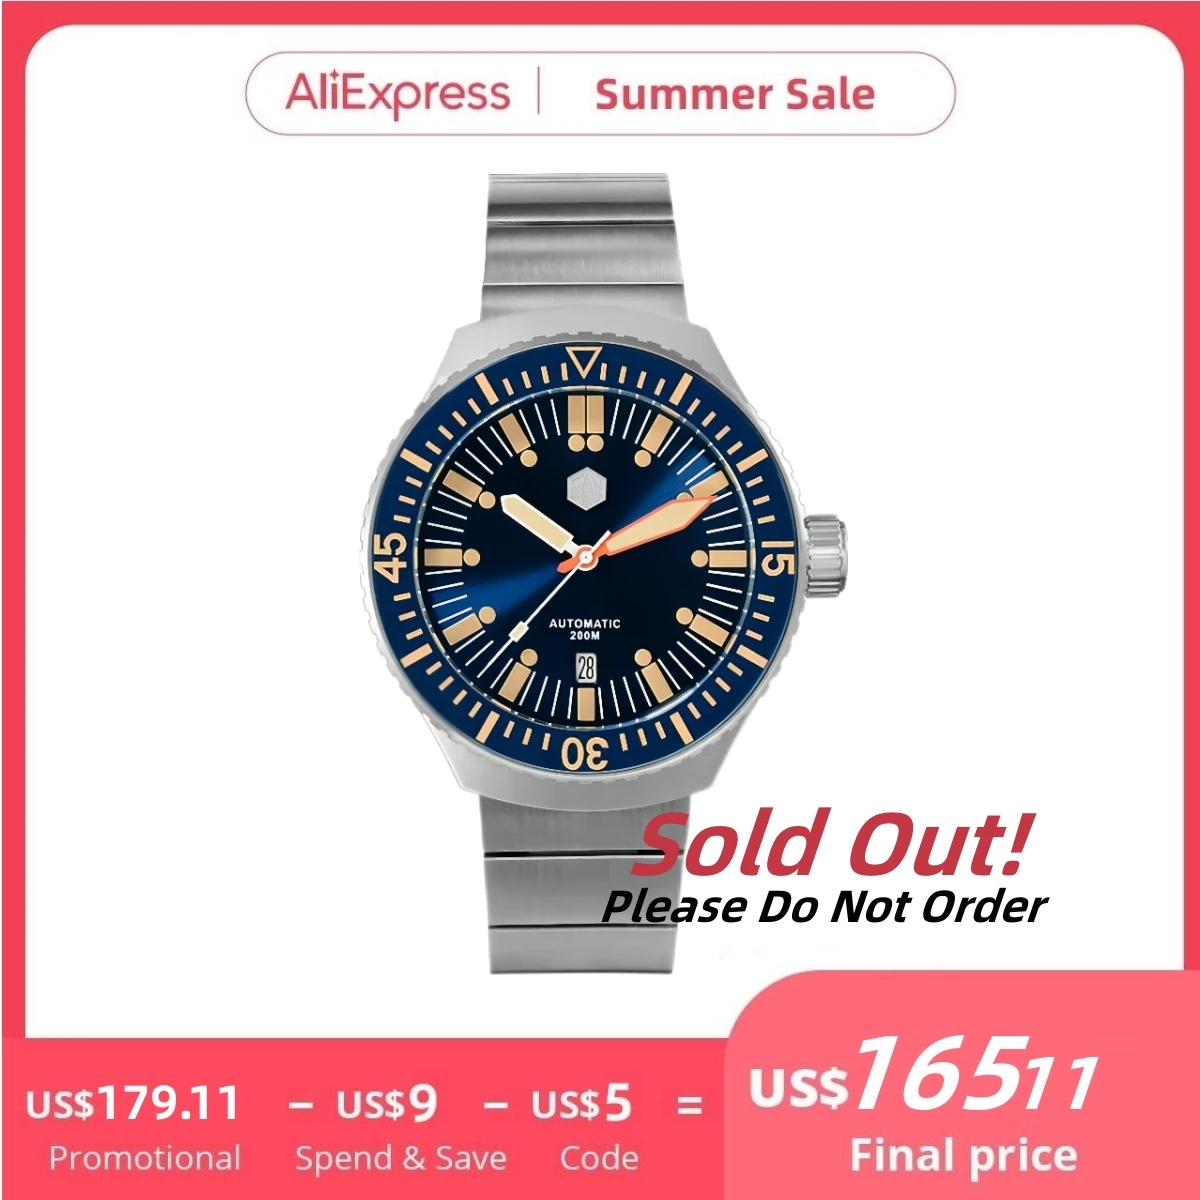 

San Martin NH35 Mechanical Watch For Men Automatic Wristwatch Calendar Date Window Sapphire 20Bar Fashion Orologio Uomo SN0039